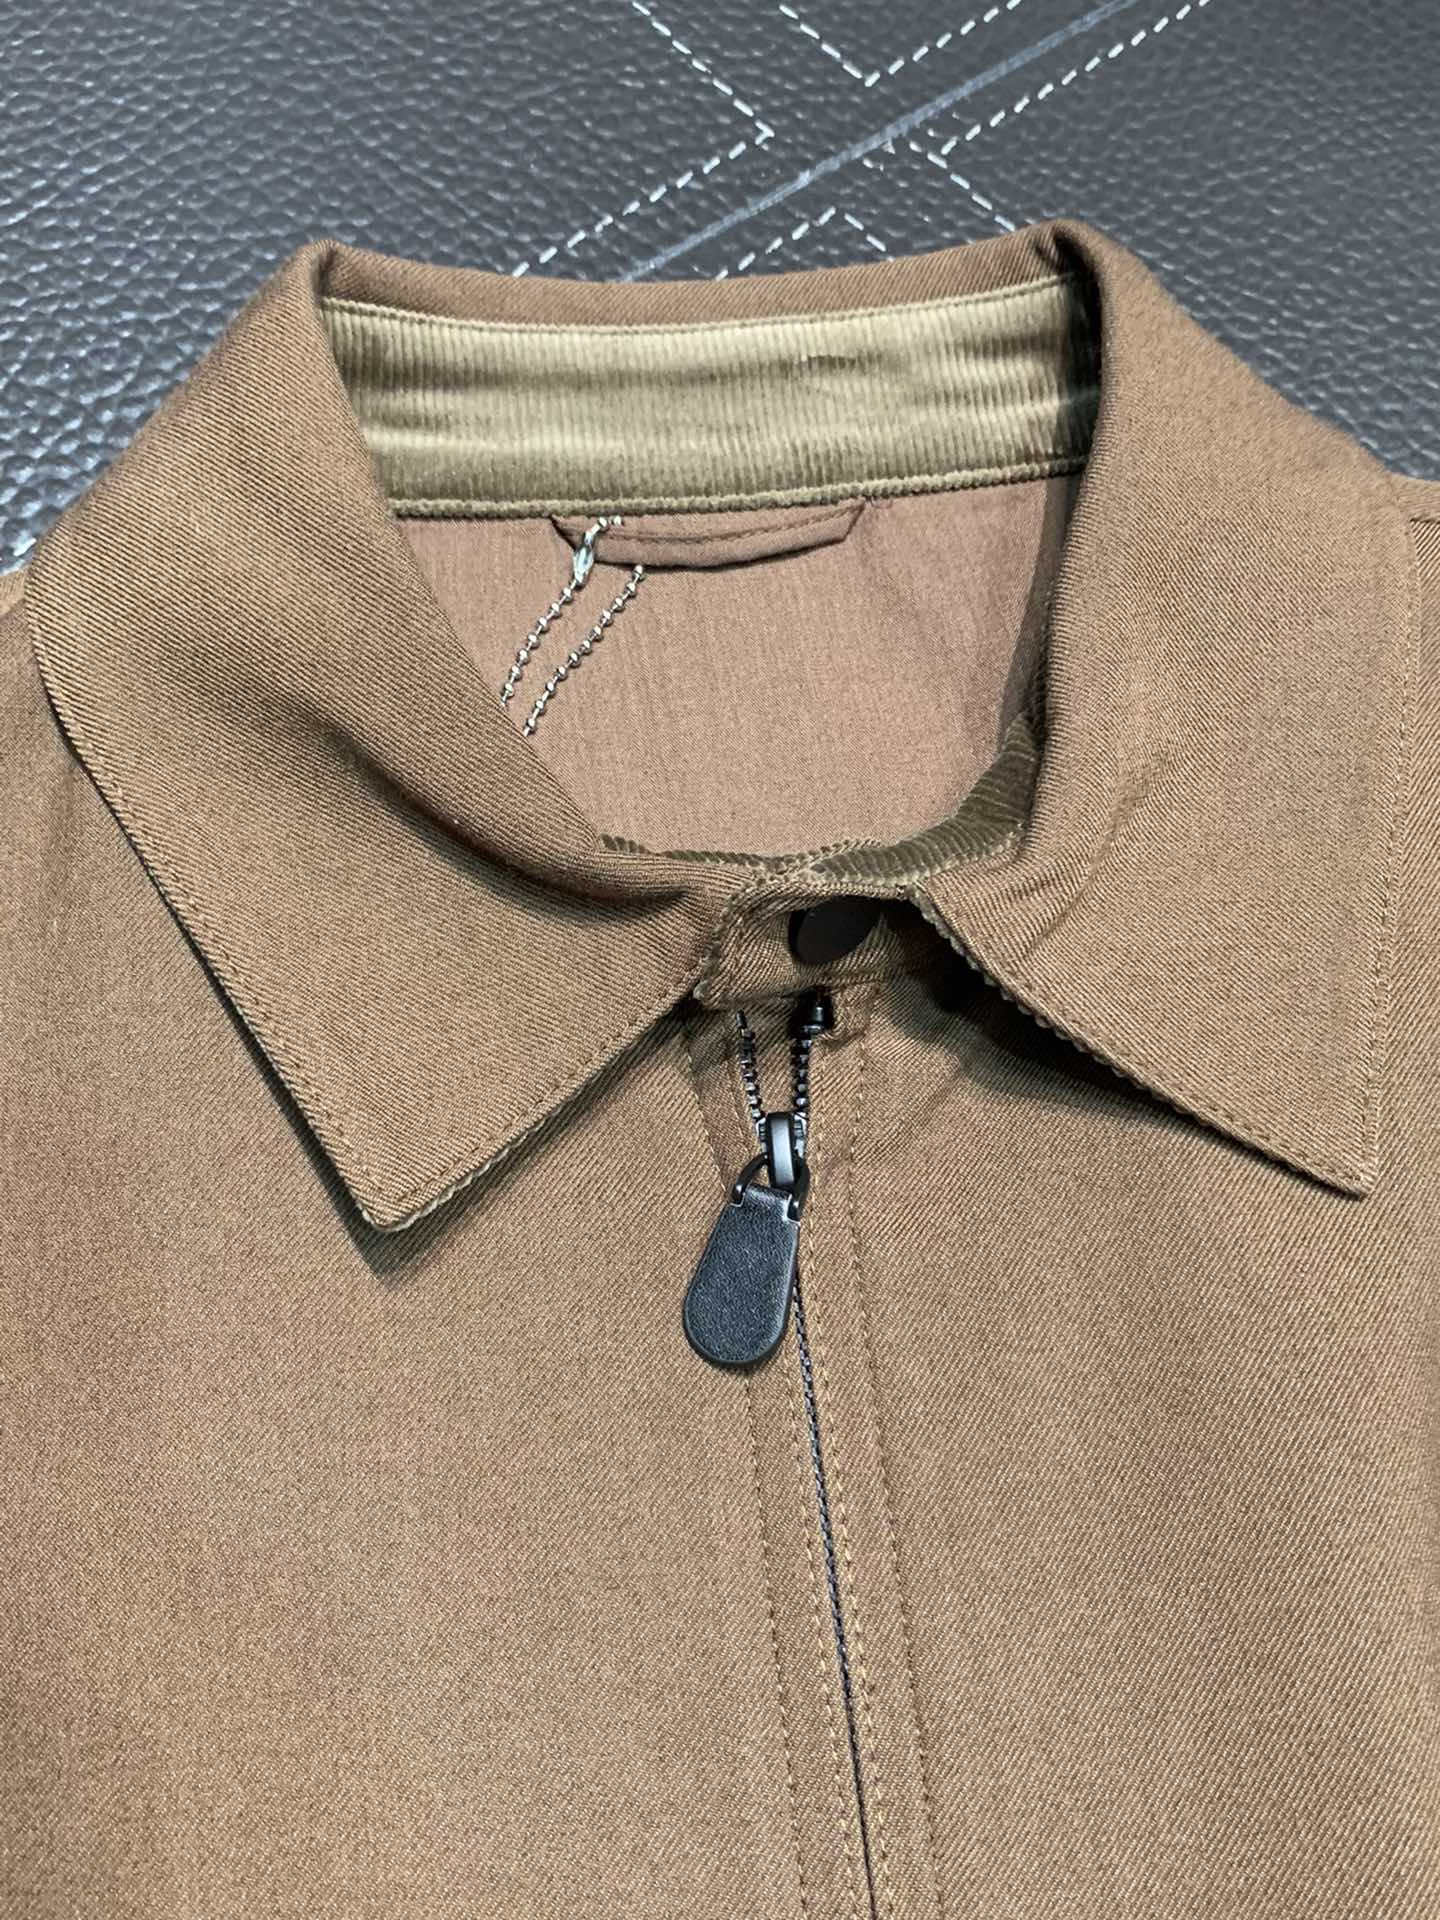 ZEGNA杰尼亚独家专供最新春秋时尚翻领夹克外套经典设计感与颜值爆棚的外套品质更是无法挑剔品控可以直接入